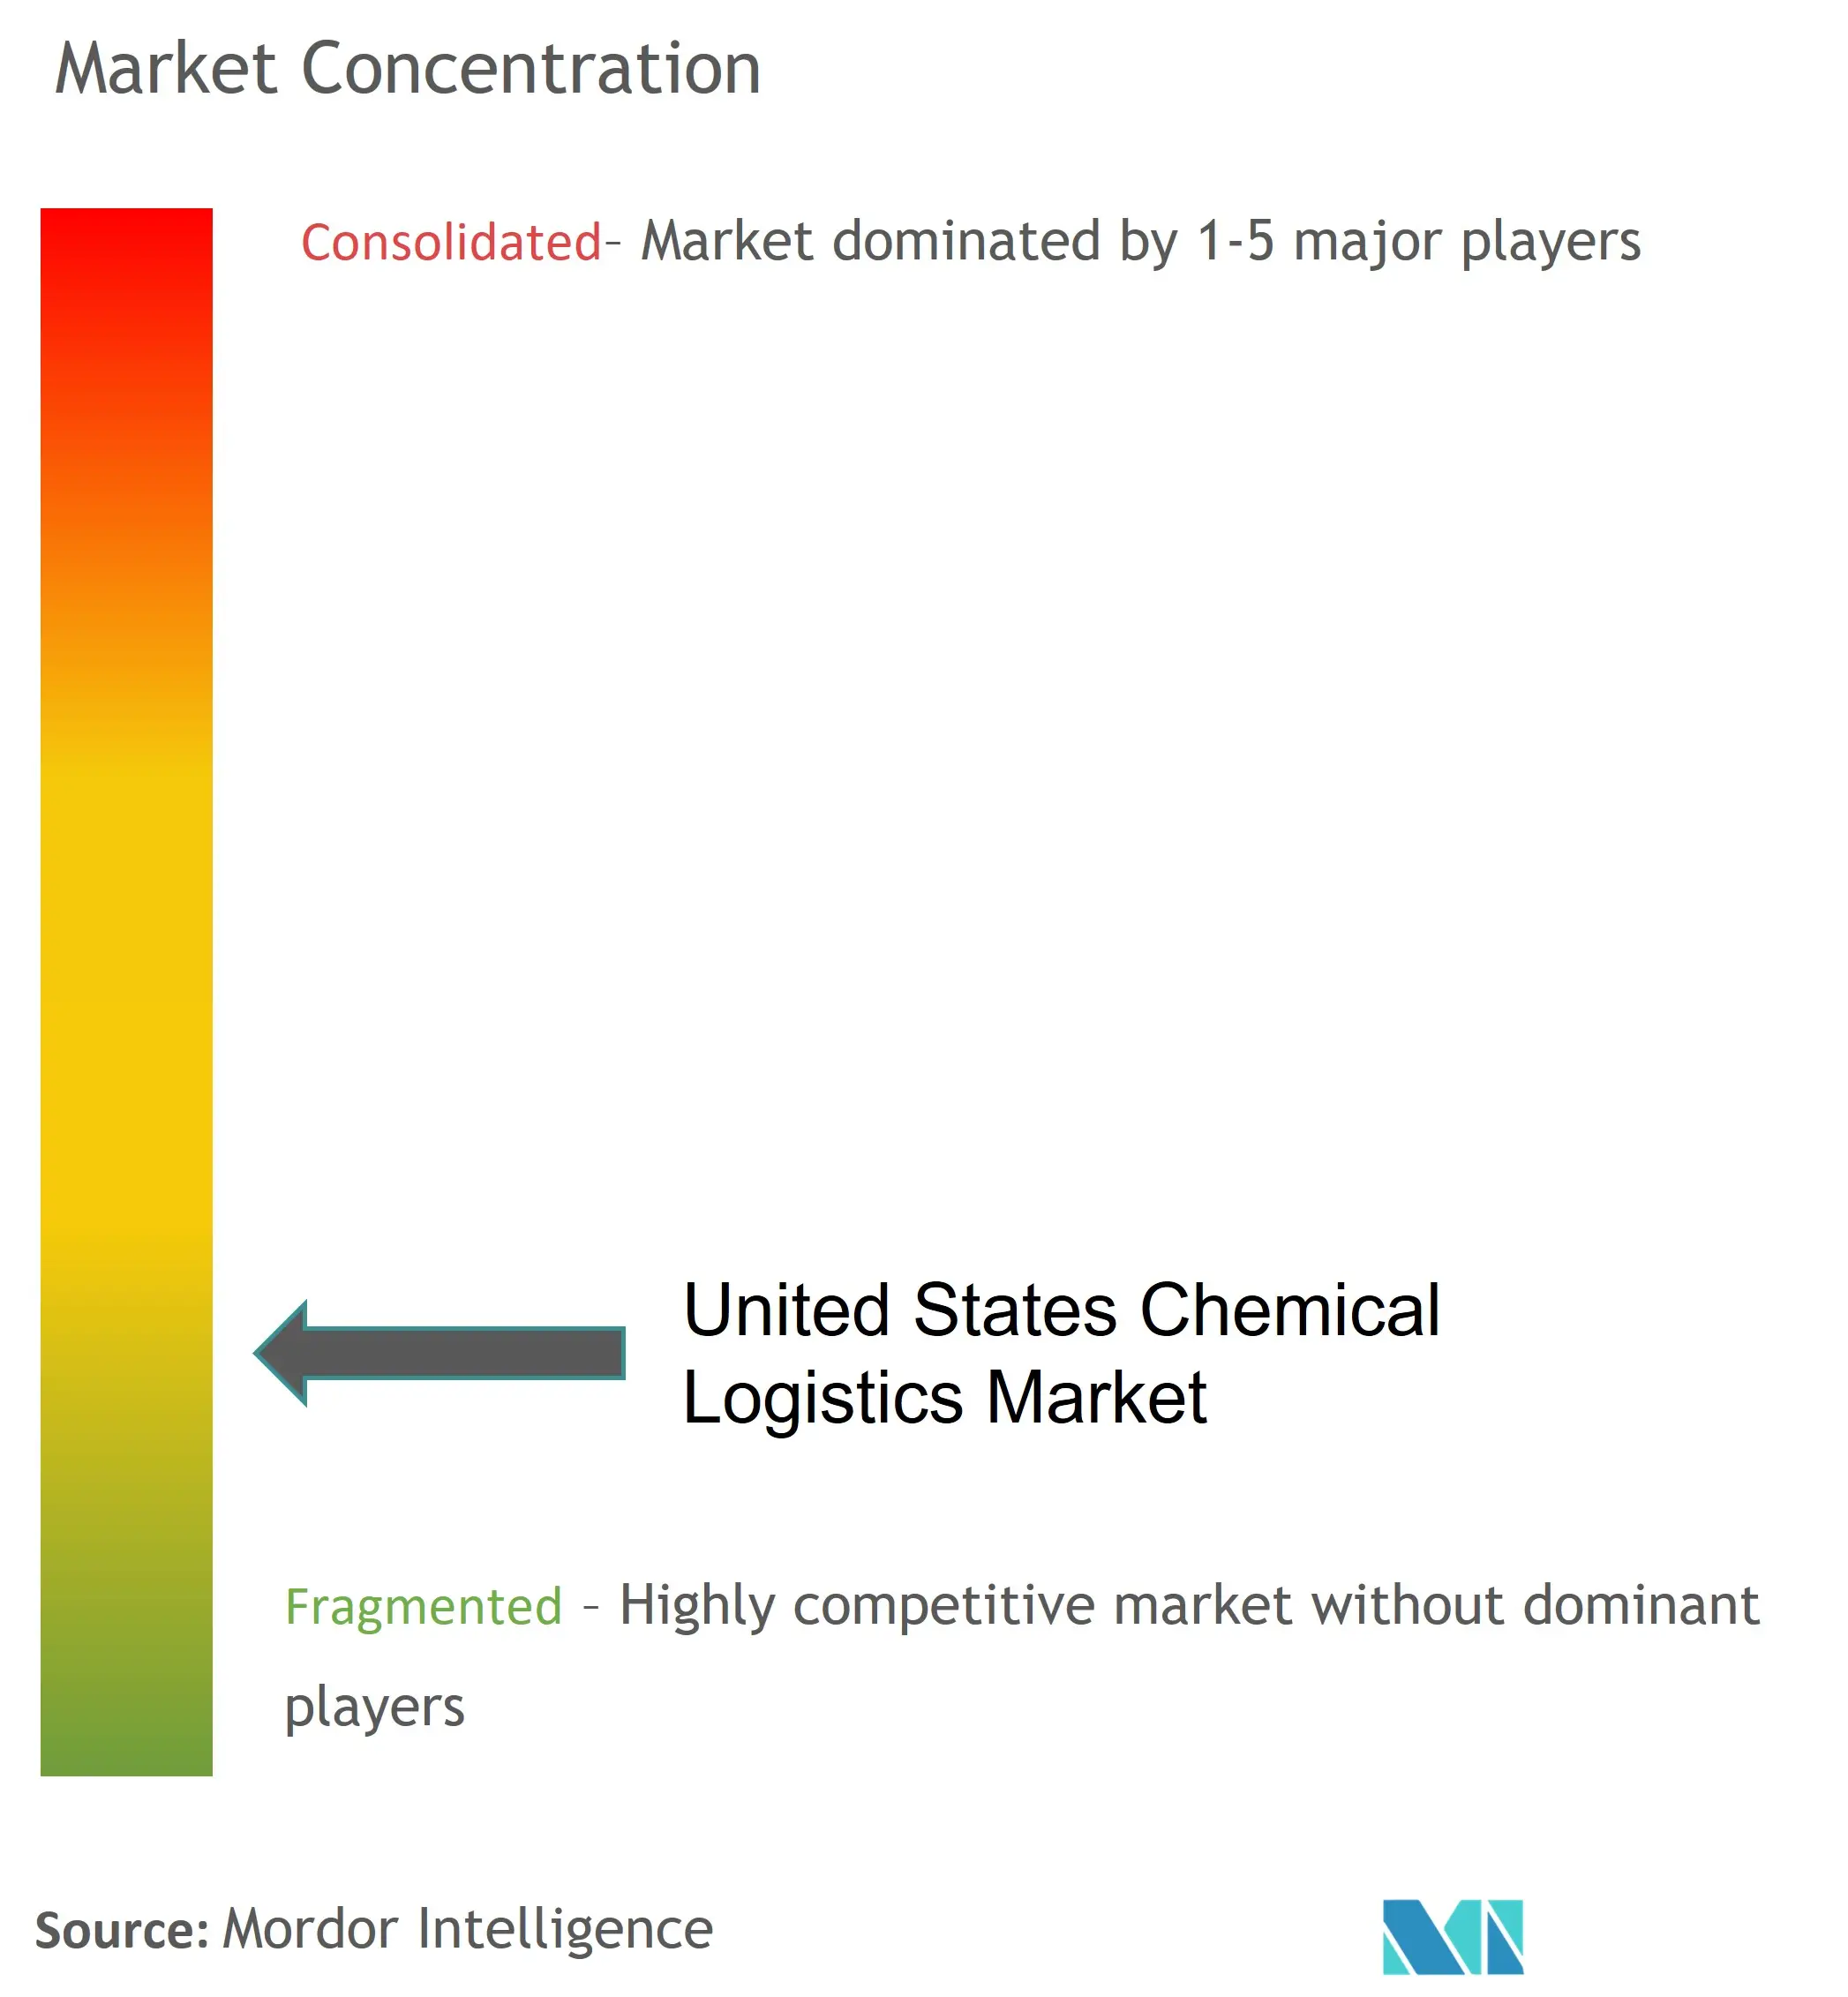 United States Chemical Logistics Market Concentration